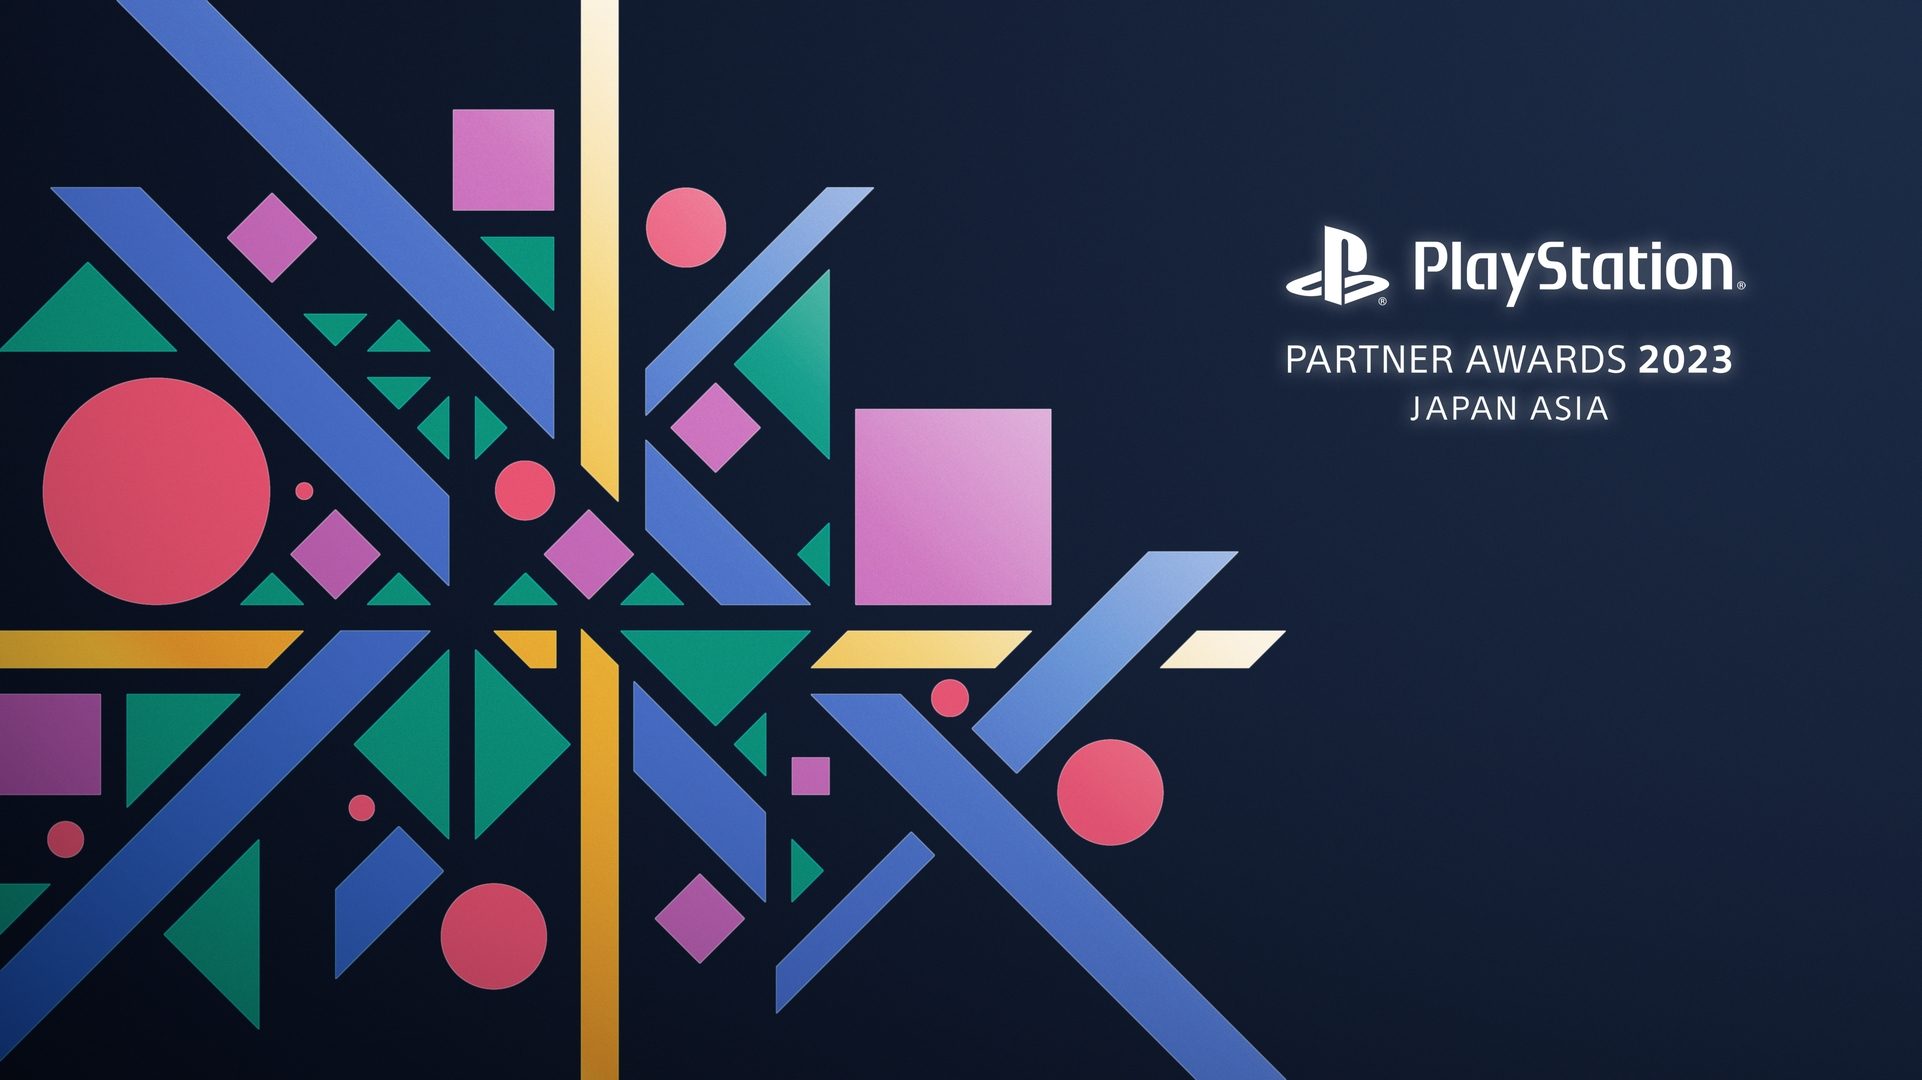 PlayStation Partner Awards 2023 Japan Asia winners announced